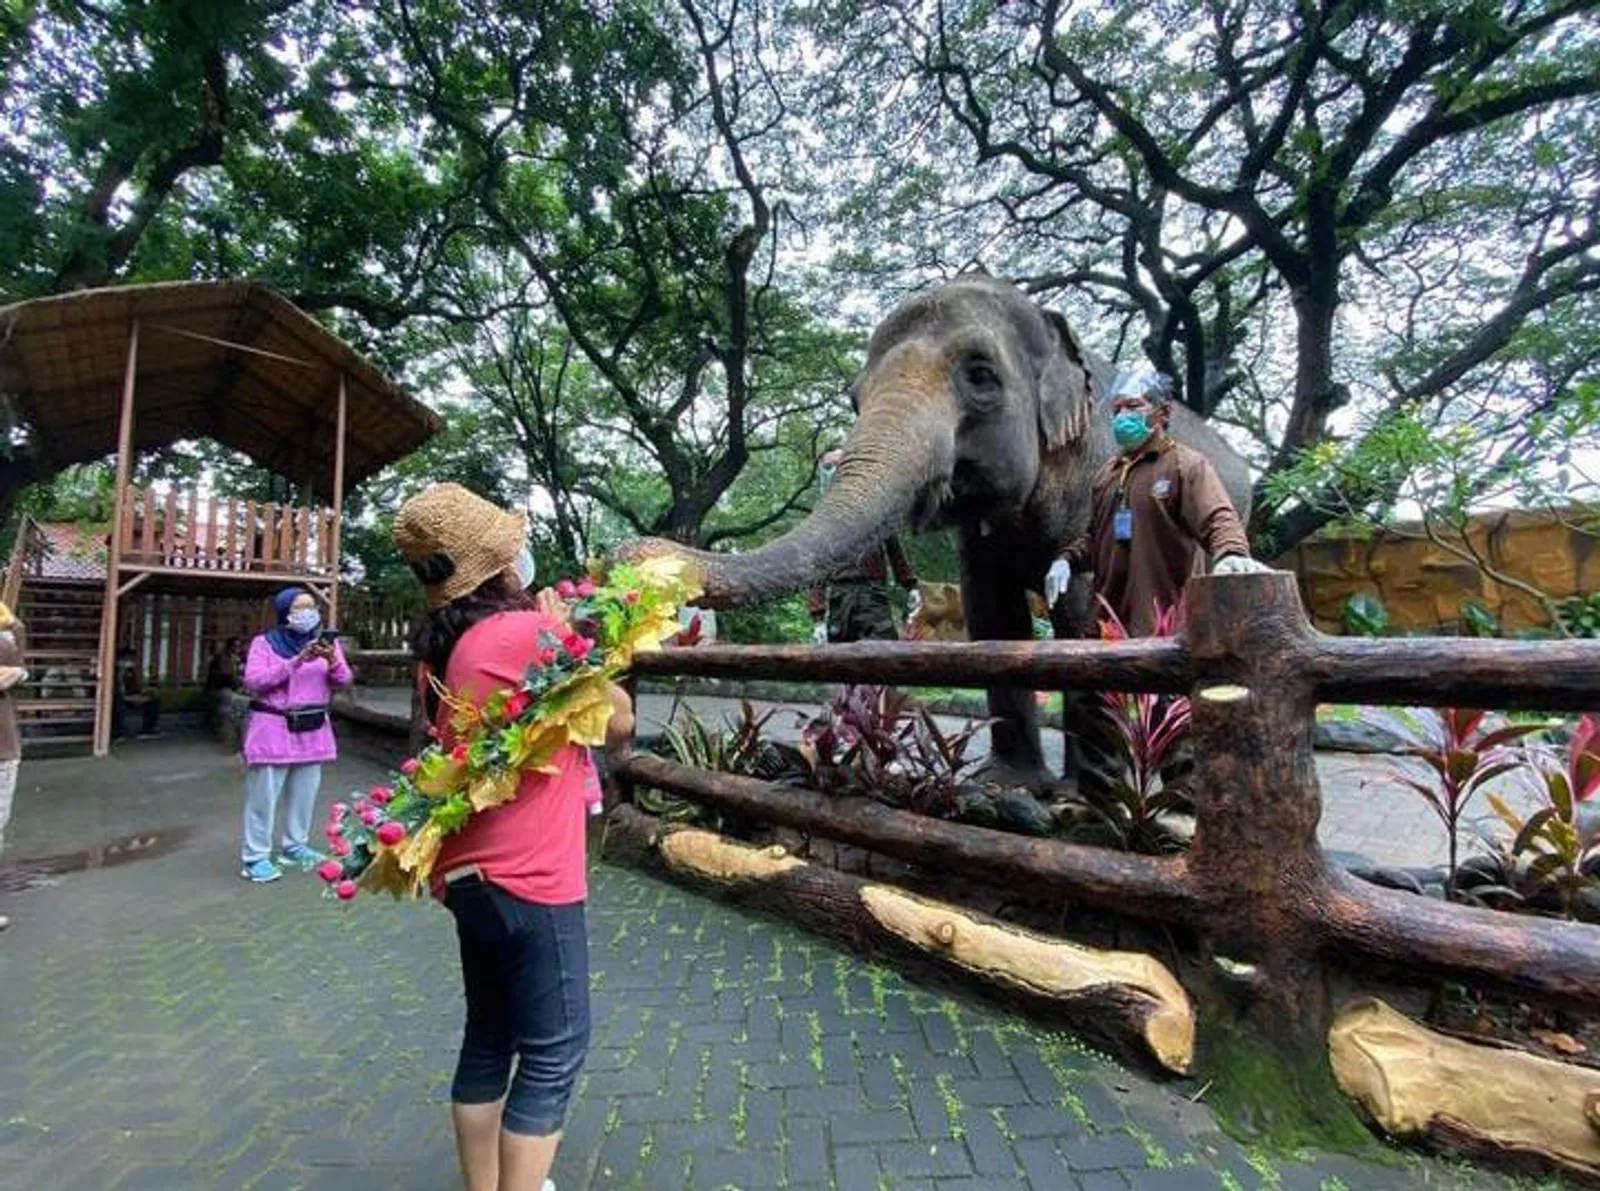 Kebun Binatang Surabaya: Lokasi, Harga Tiket, & Wahana Seru